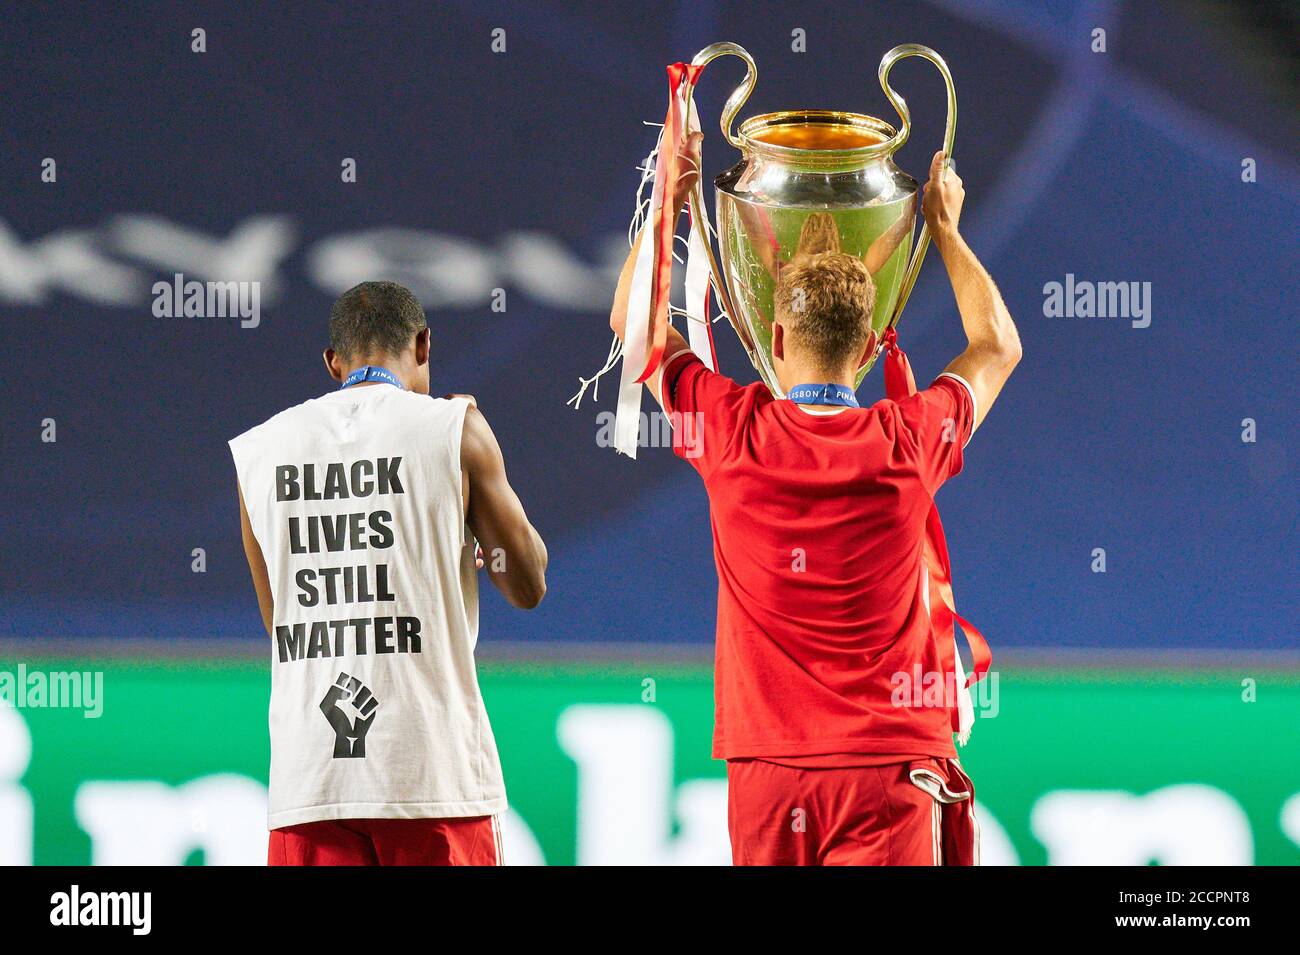 Lisbon, Lissabon, Portugal, August 2020. David ALABA, FCB 27 with t- shirt Black still matter, Politik, gegen Rassismus, Meinung, Joshua KIMMICH, FCB 32 team FCB win the trophy in the final